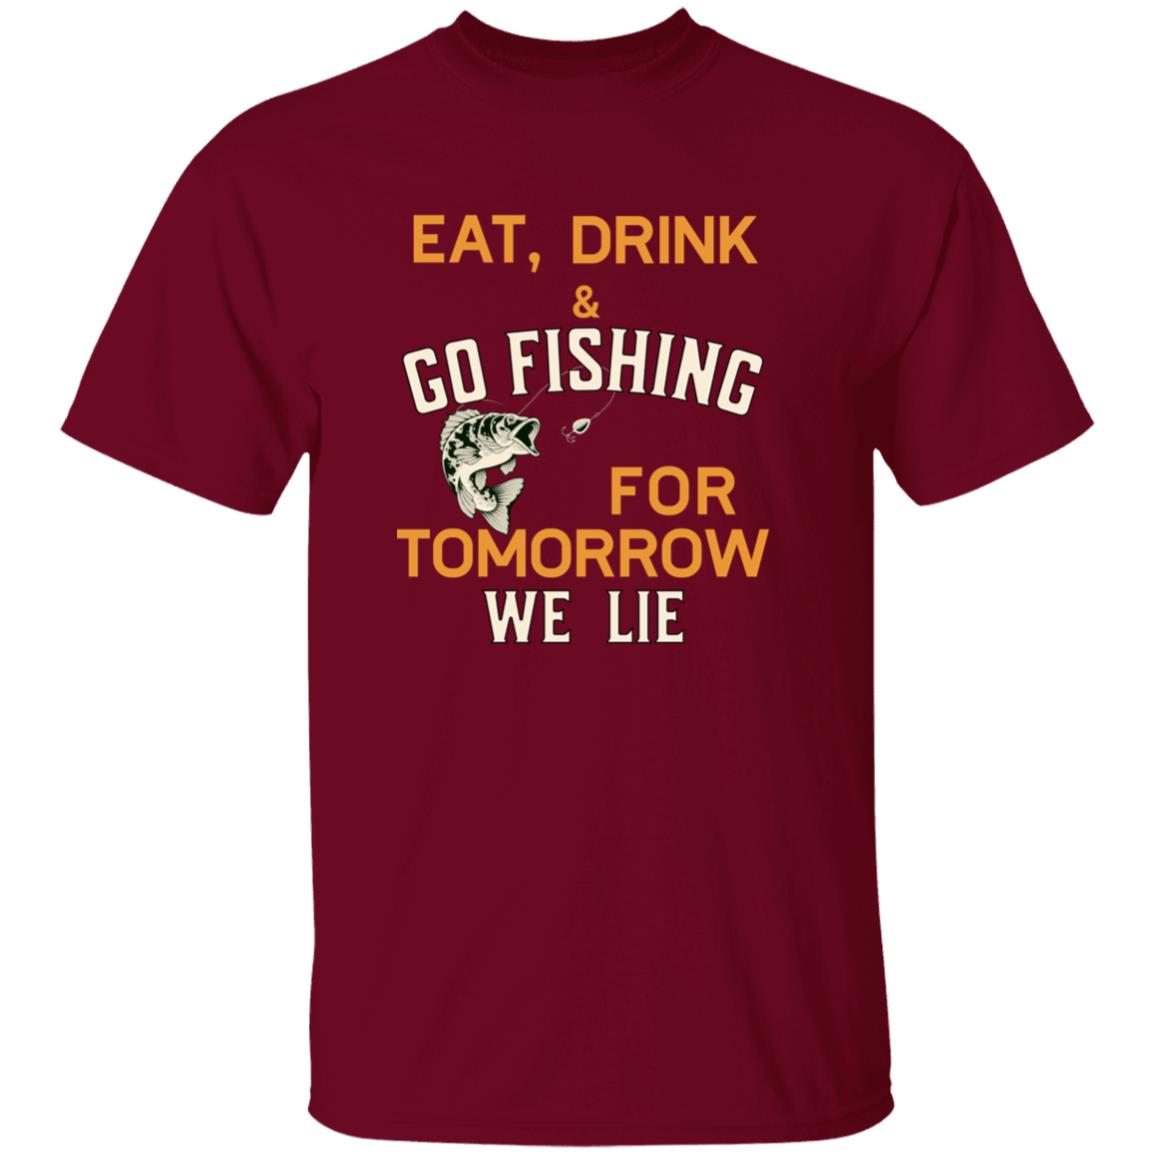 Eat drink & go fishing for tomorrow we lie k t-shirt garnet